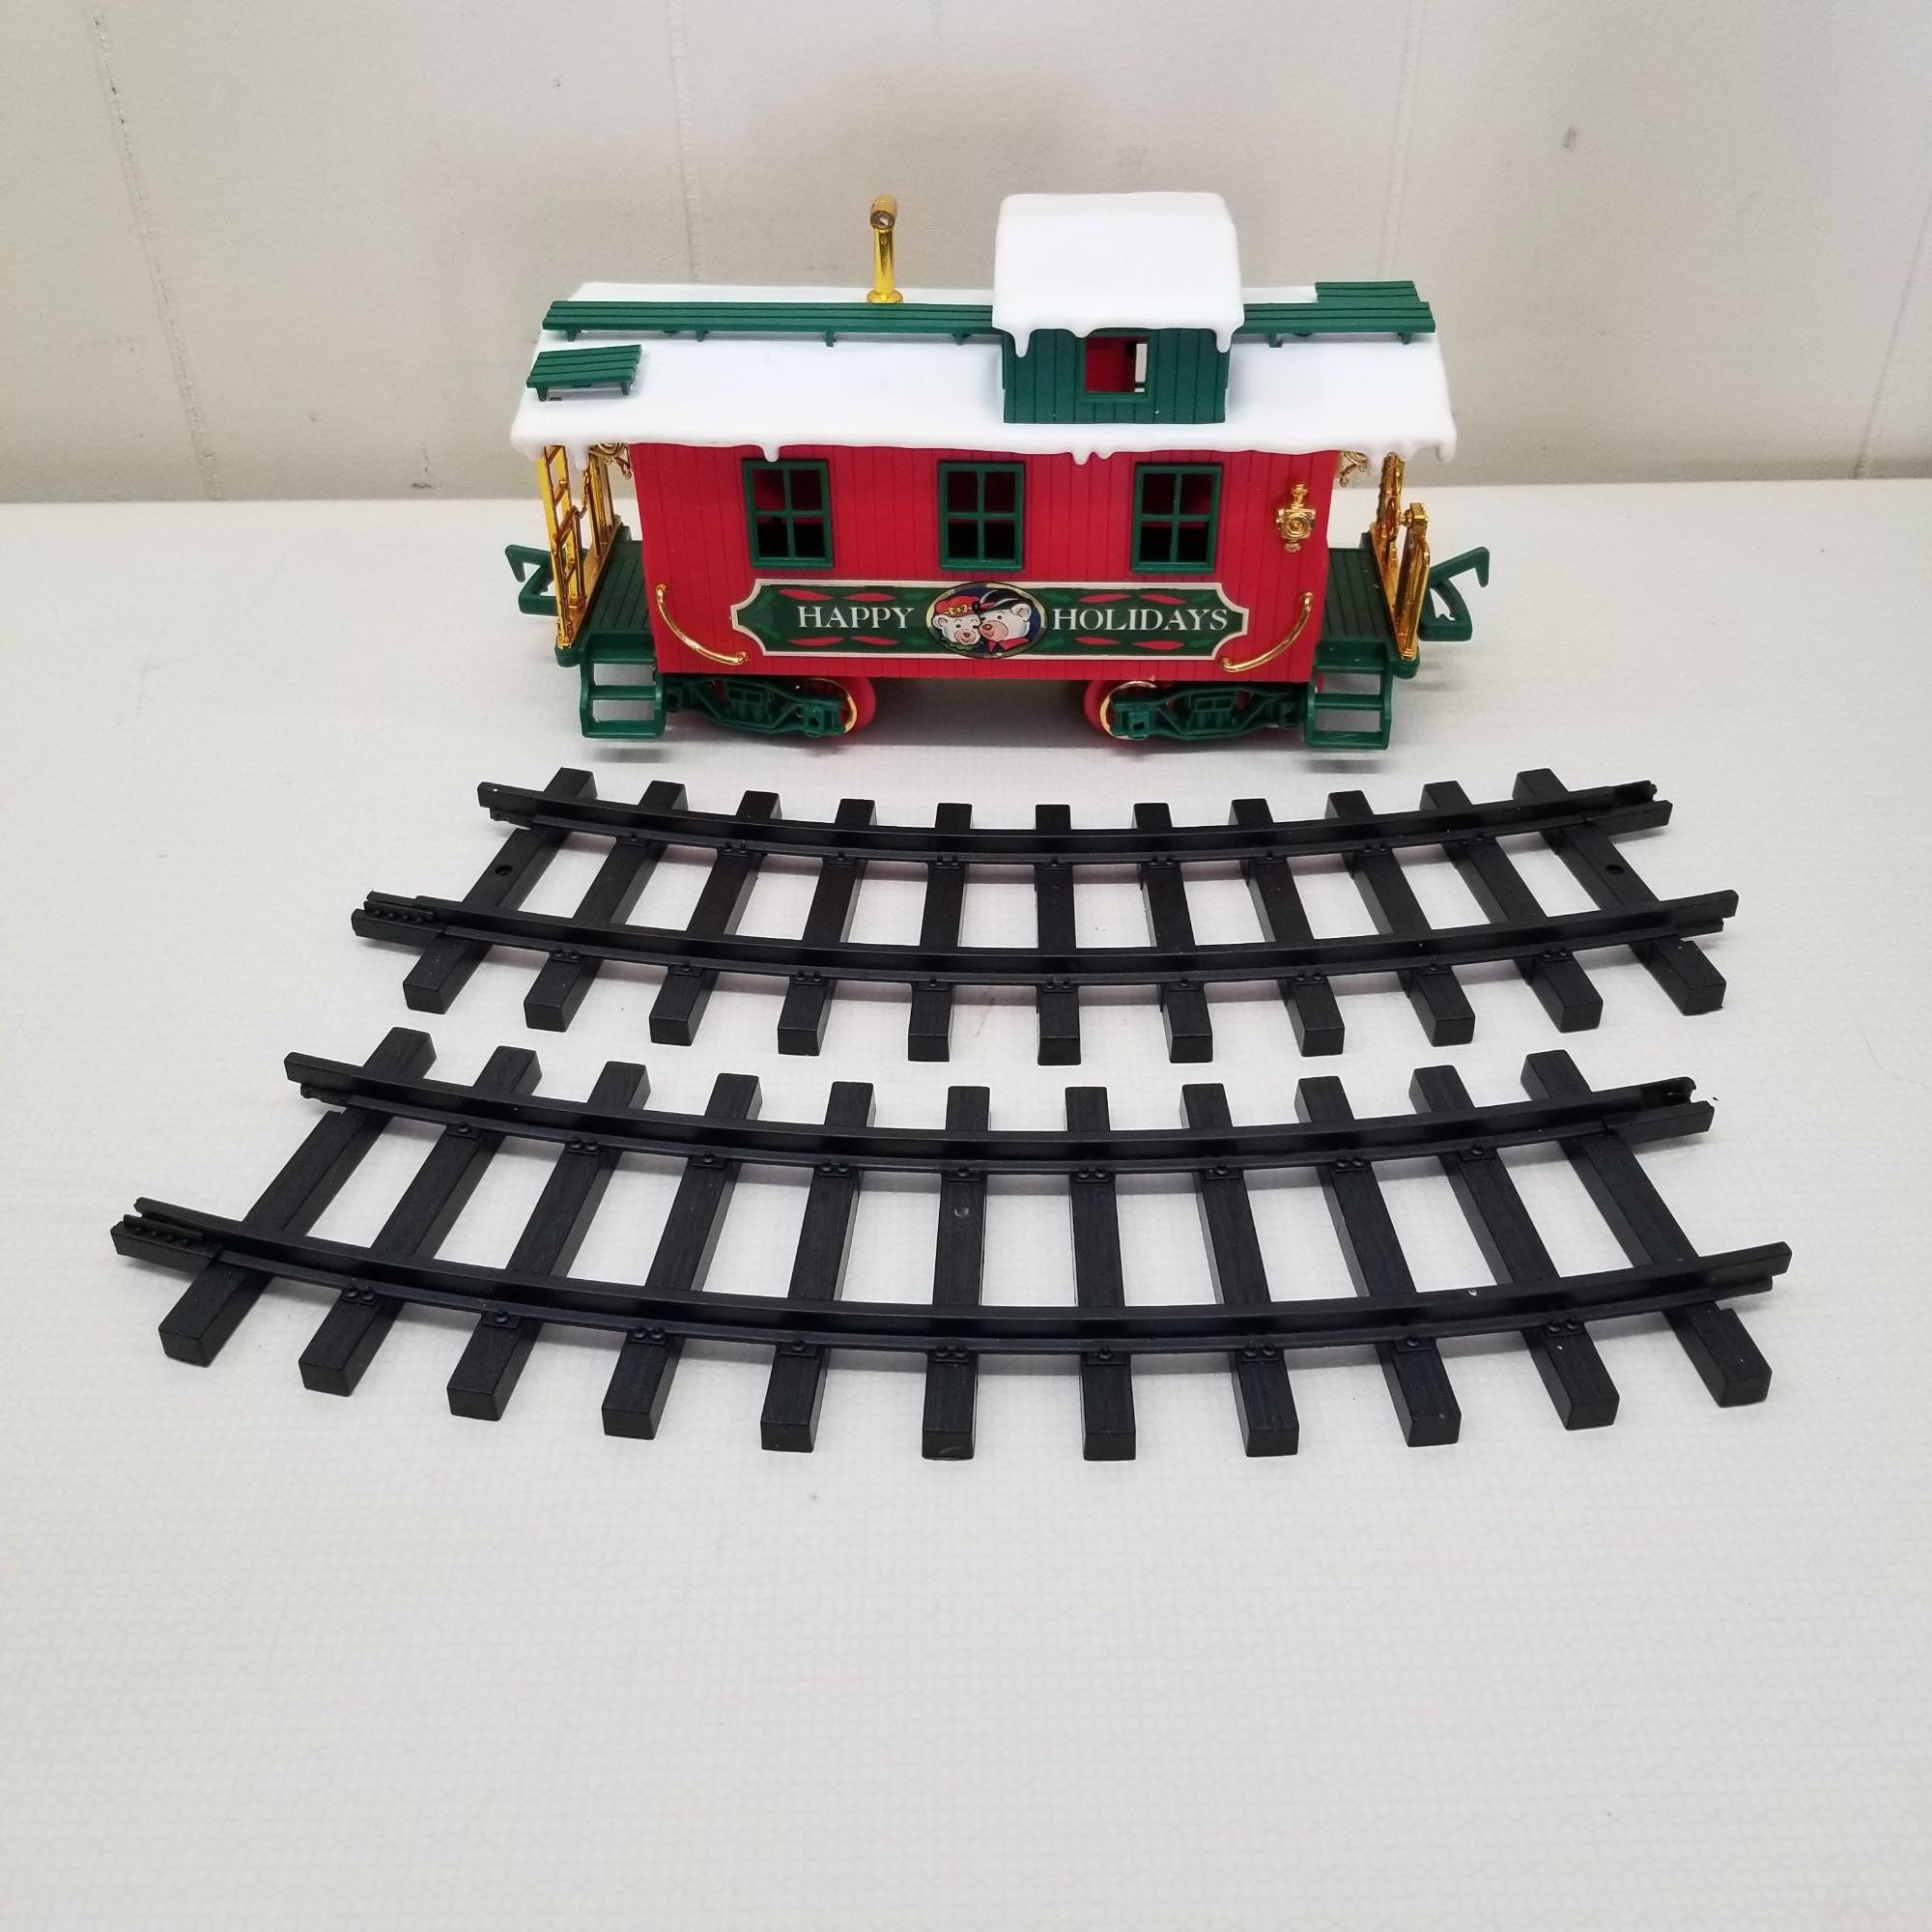 4 New Bright G Scale Black Plastic Curved Train Tracks 1986 Vintage 